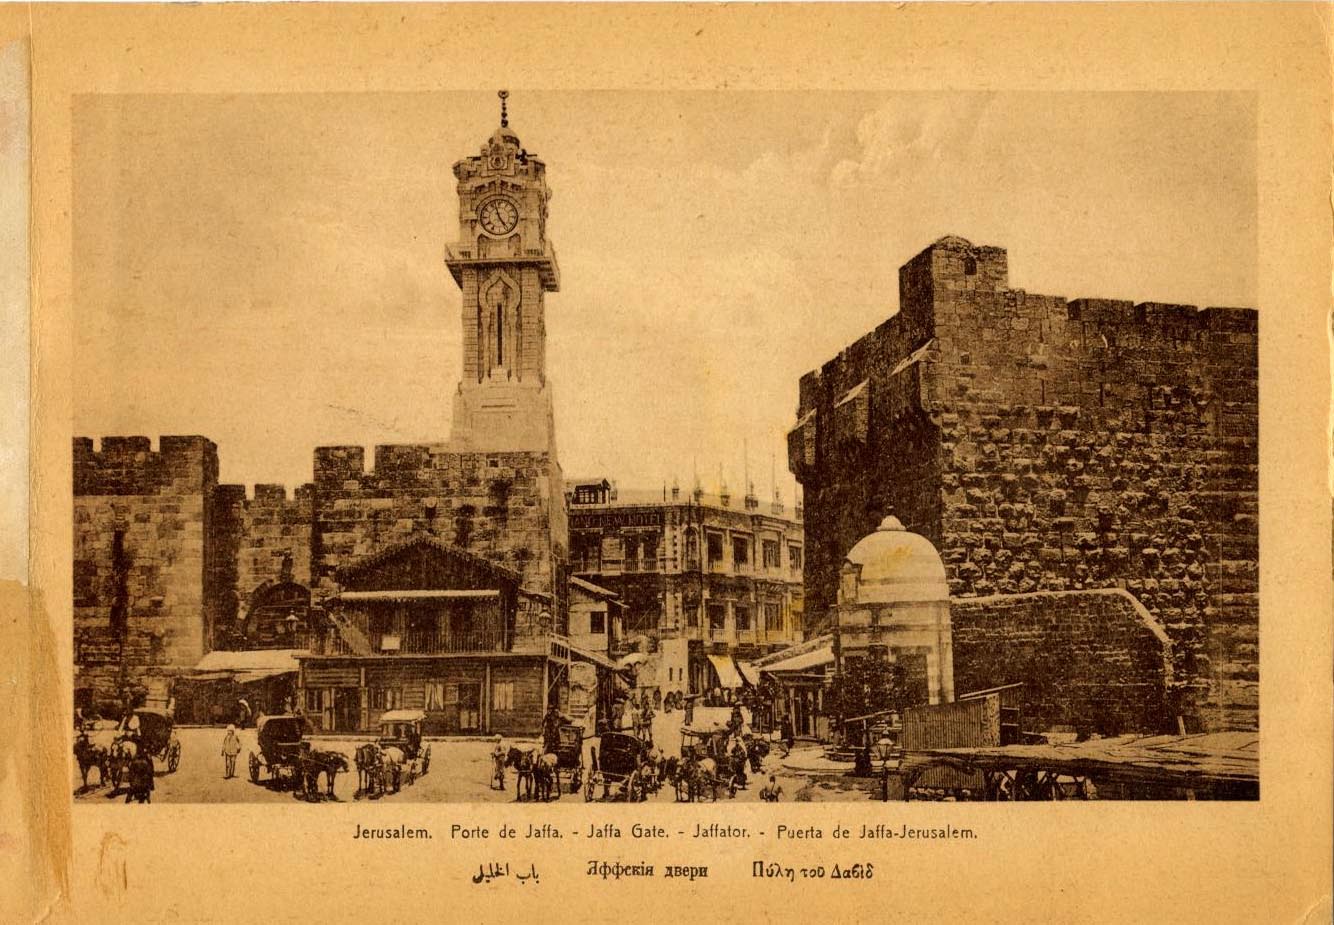 The Jerusalem clock tower at Jaffa Gate, circa 1913. Photo via Gilai Collectibles